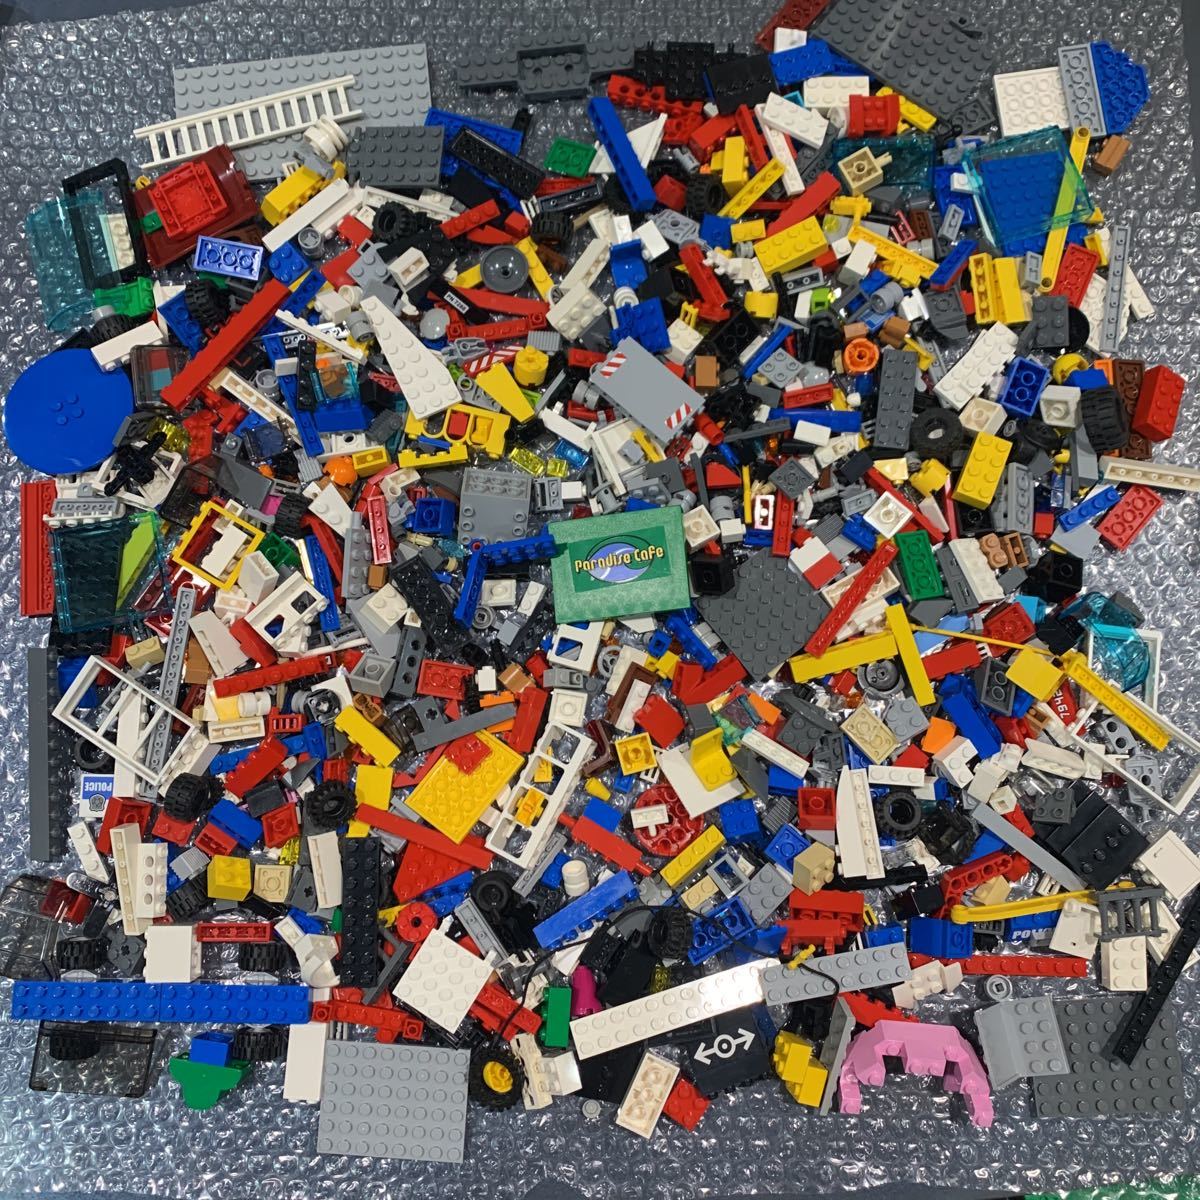 Yahoo!オークション - LEGO レゴ レゴブロック パーツ部品 大量セット